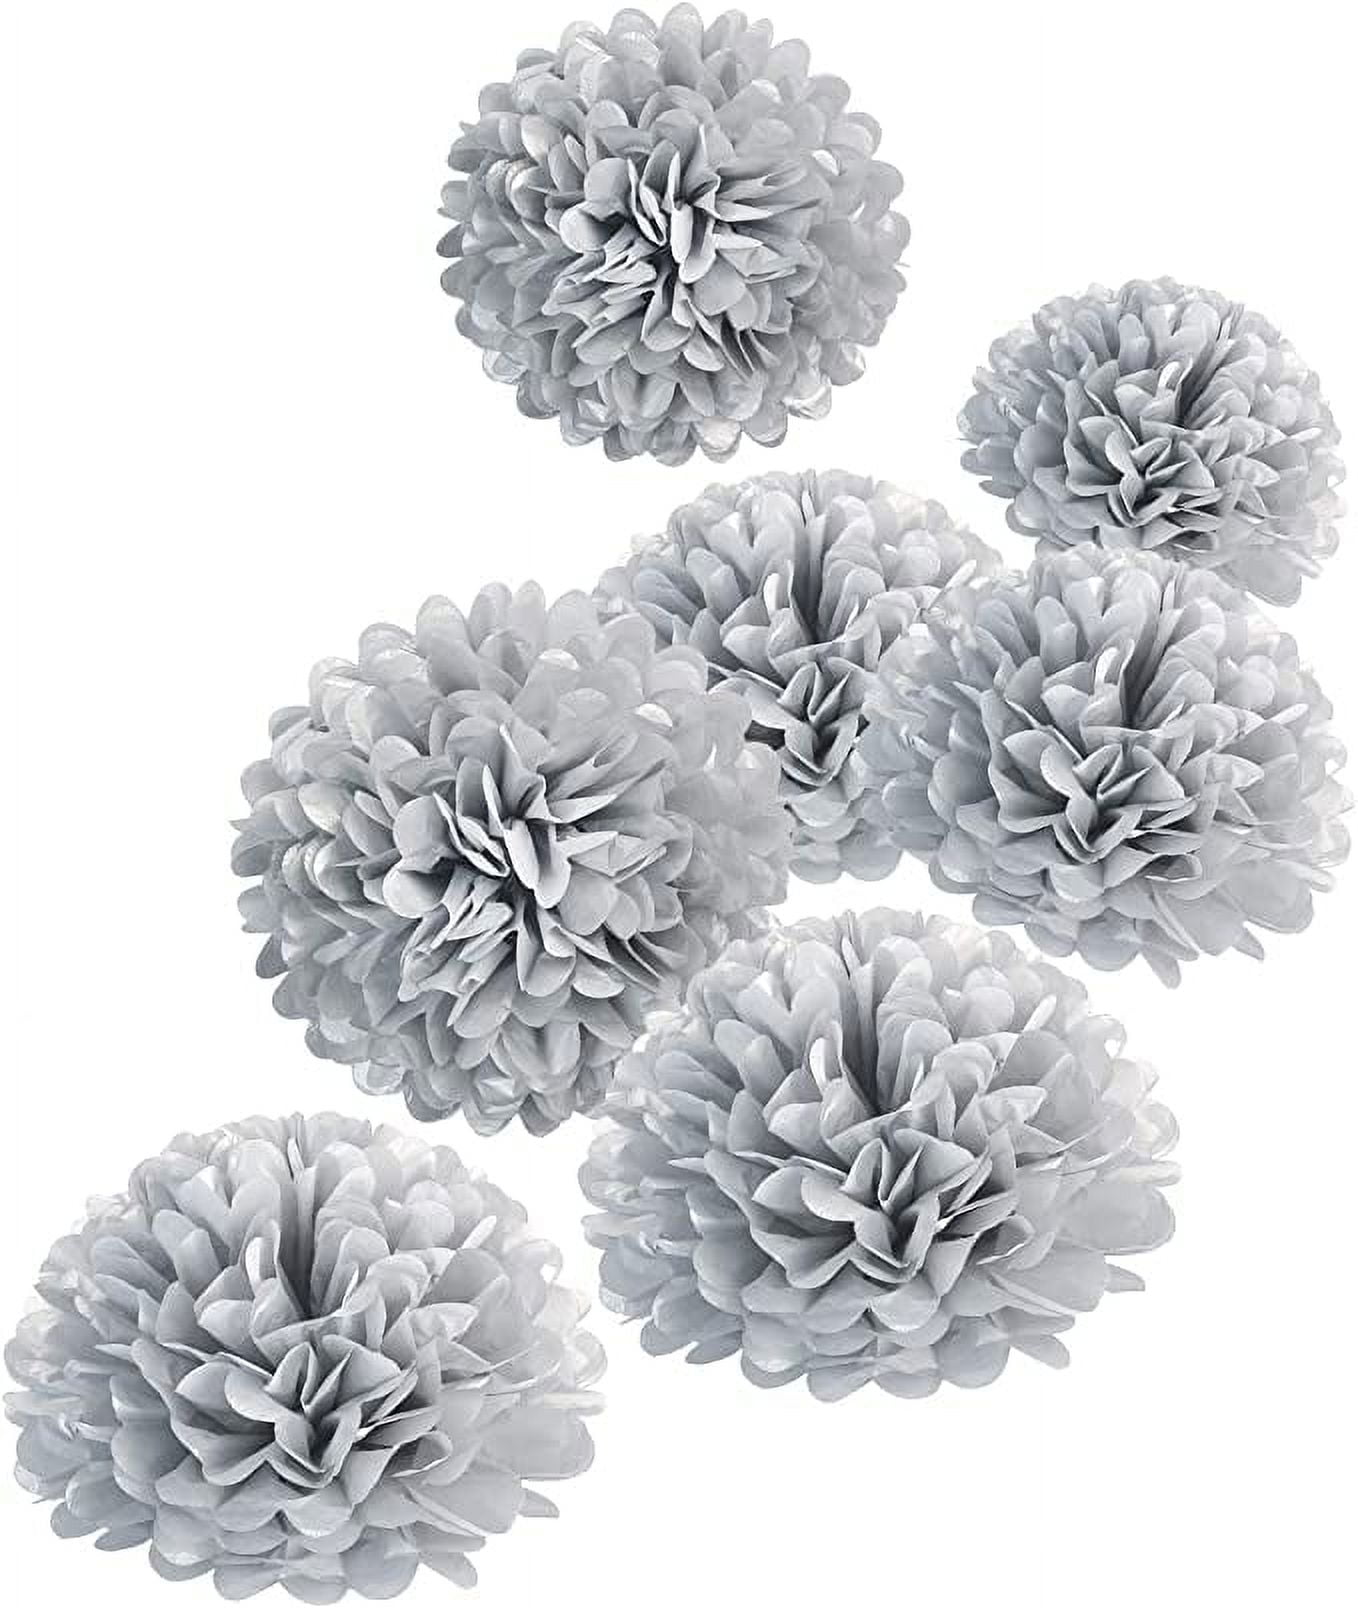 Misu 10 Navy Blue Tissue Pom Poms DIY Tissue Paper Flowers for Birthday Wedding Baby Shower Tea Party Dessert Table Decorati